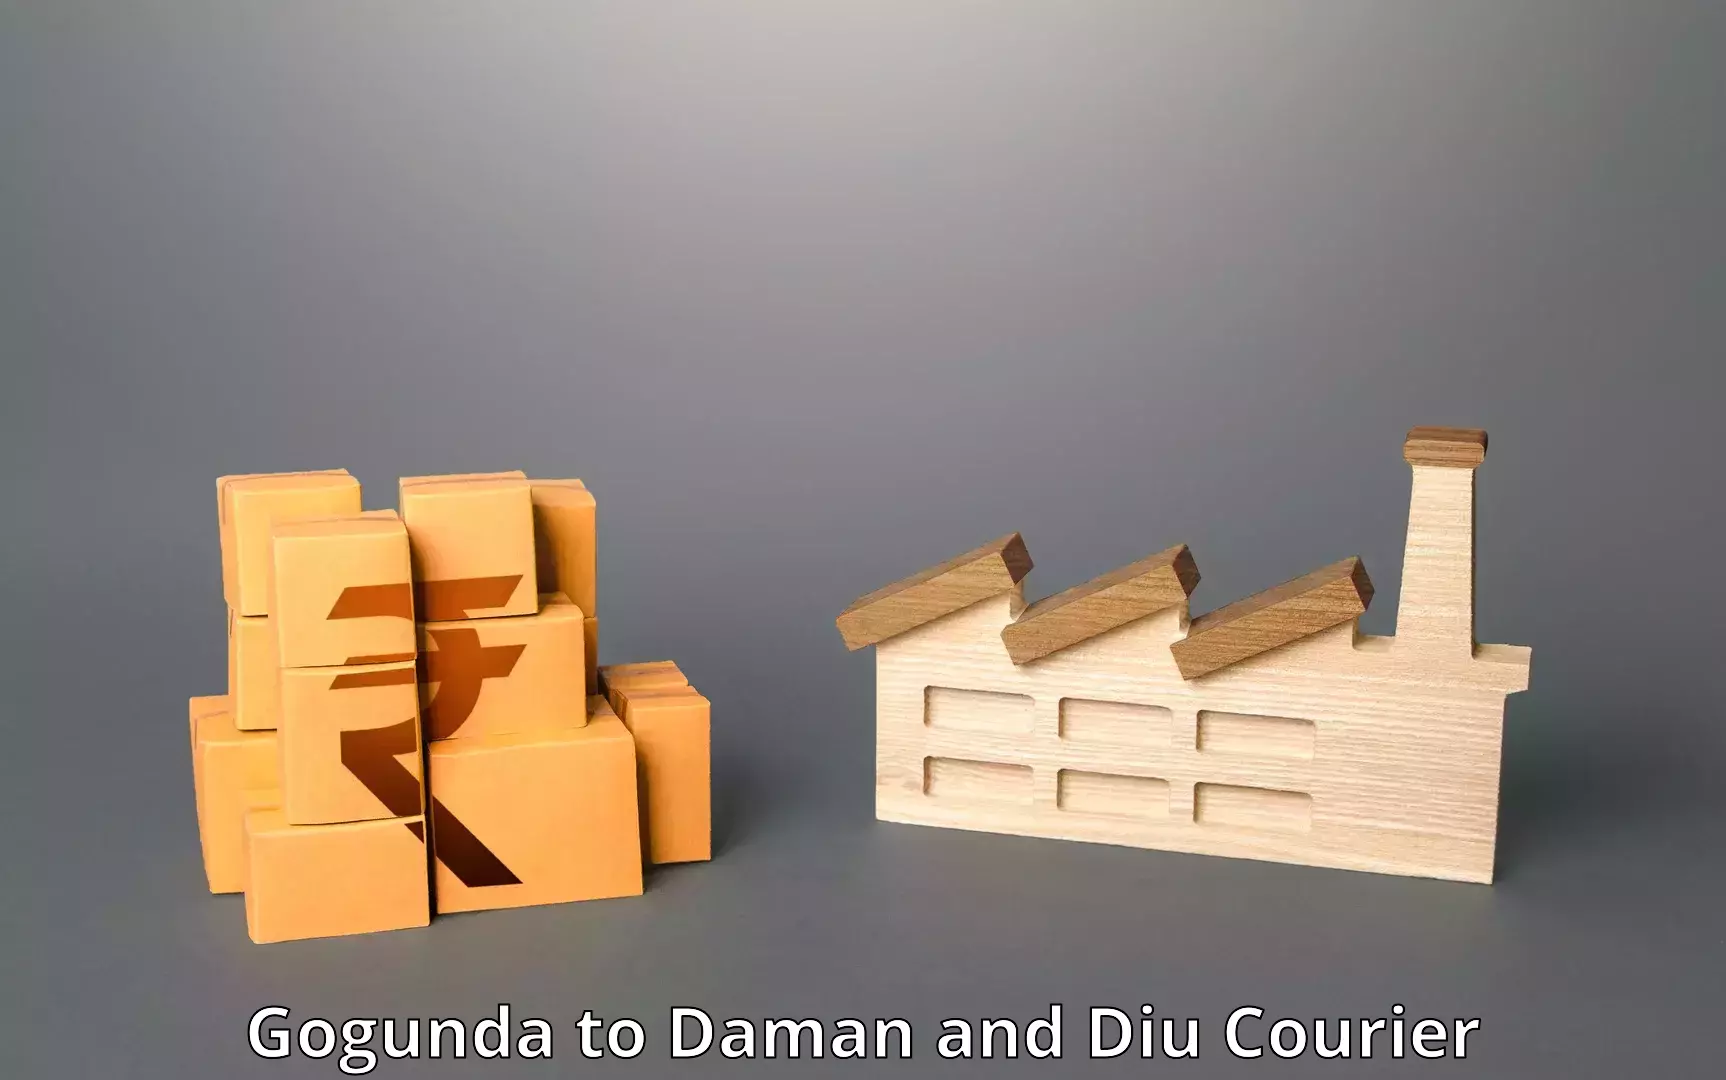 Urgent courier needs Gogunda to Daman